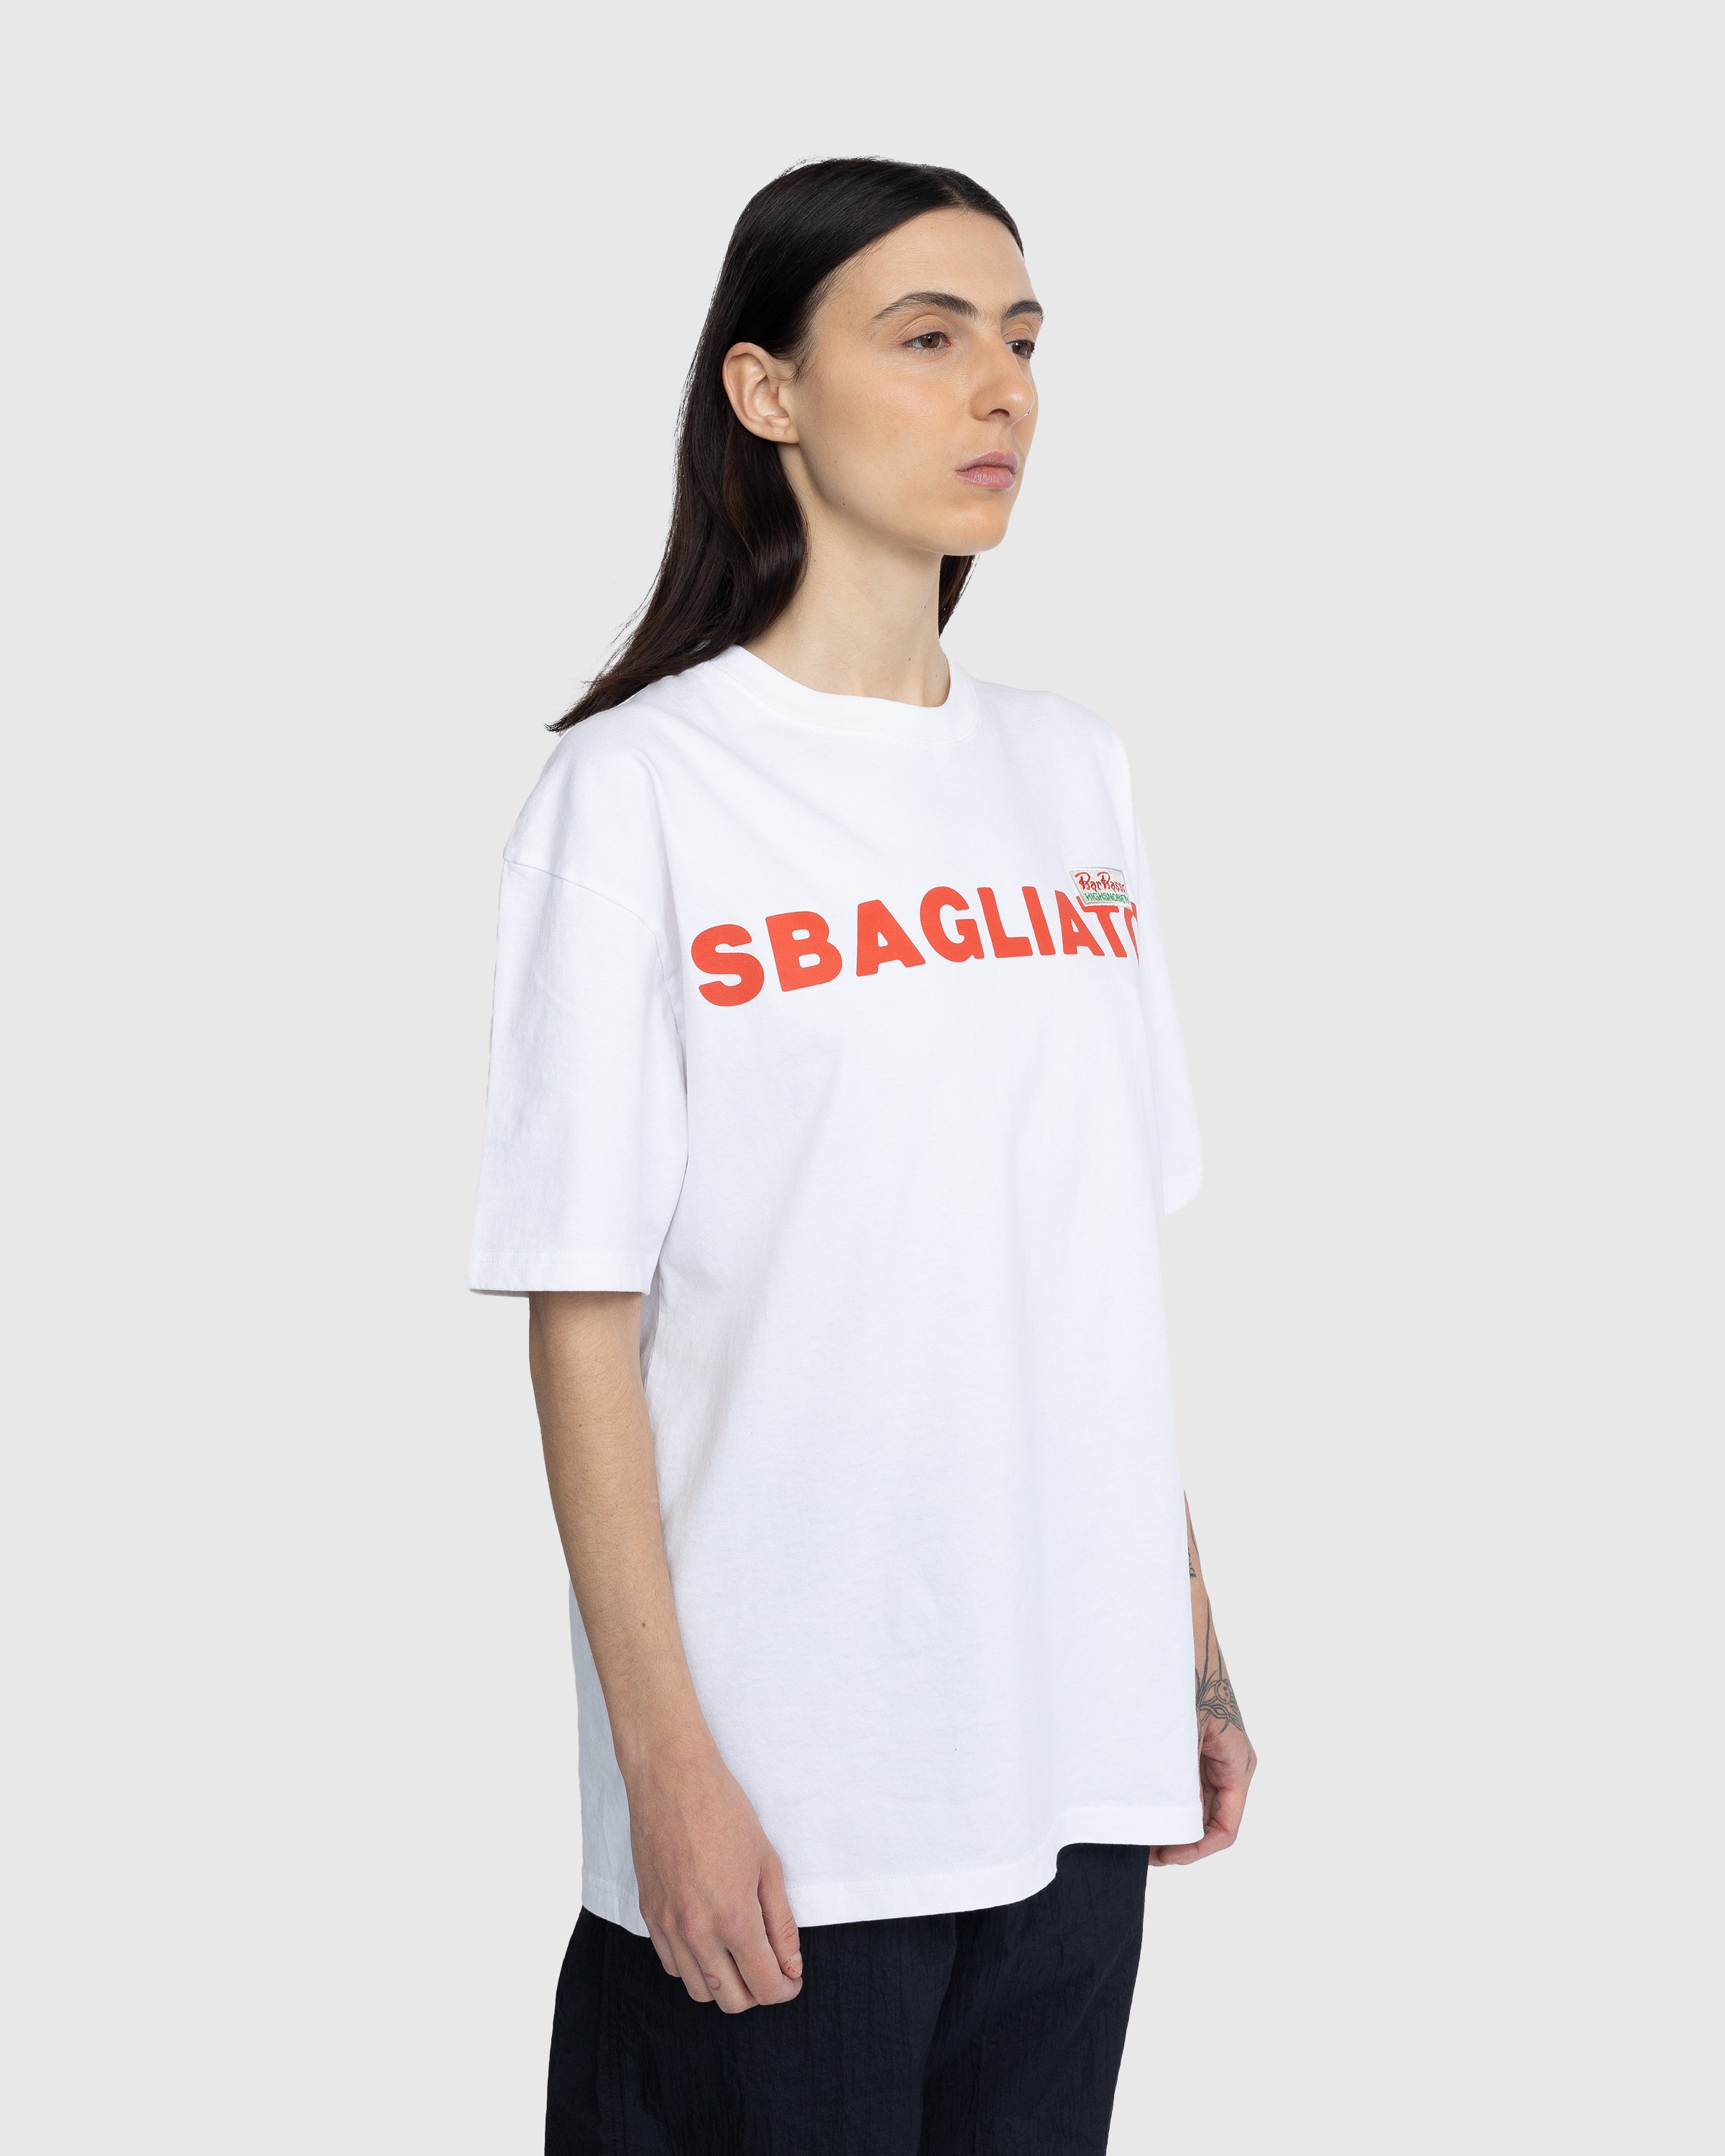 Bar Basso x Highsnobiety - Sbagliato T-Shirt White - Clothing - White - Image 7